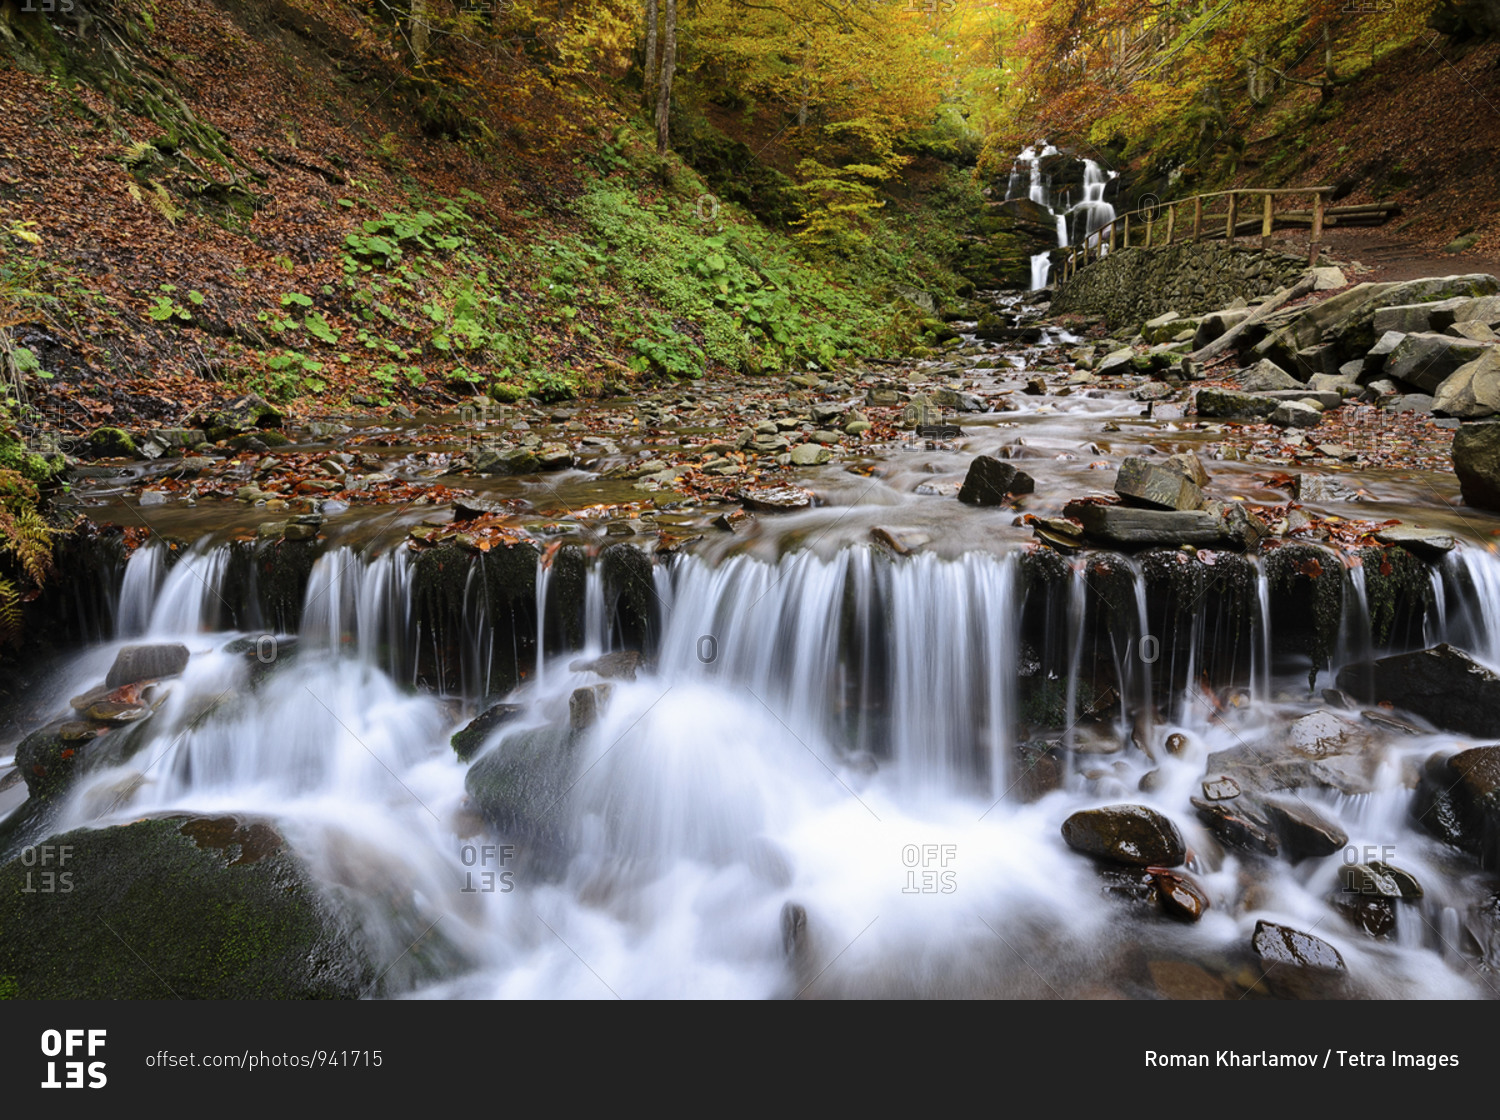 Ukraine, Zakarpattia region, Carpathians, Verkhniy Shypot
waterfall, Blurred waterfall in autumn woods stock photo -
OFFSET